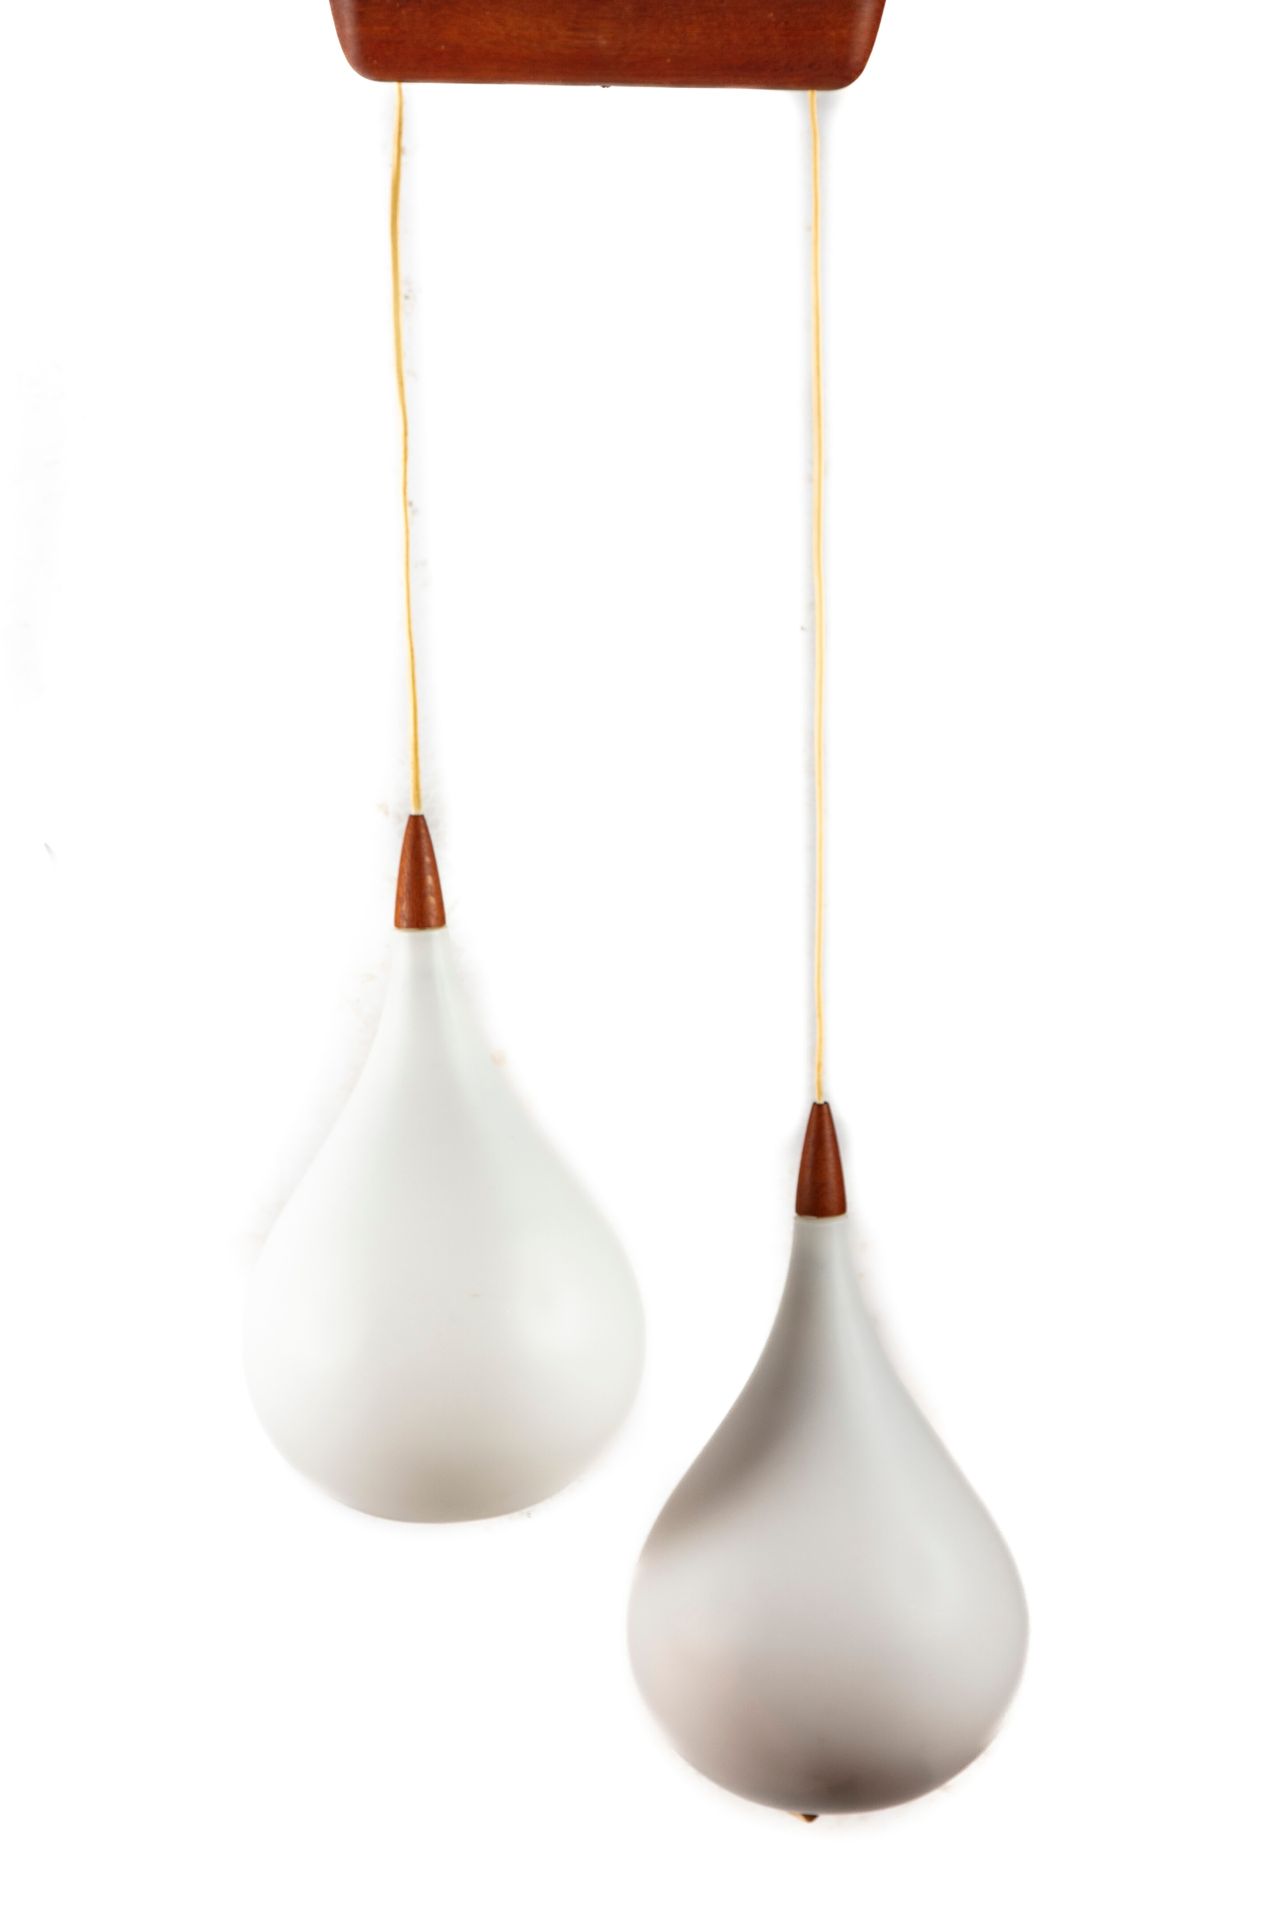 Null UNO & KRISTIANSSON for Luxus, Vittsjö
落地灯，有两个乳白色的水滴灯罩和柚木元素
标签 "Made in Swed&hellip;